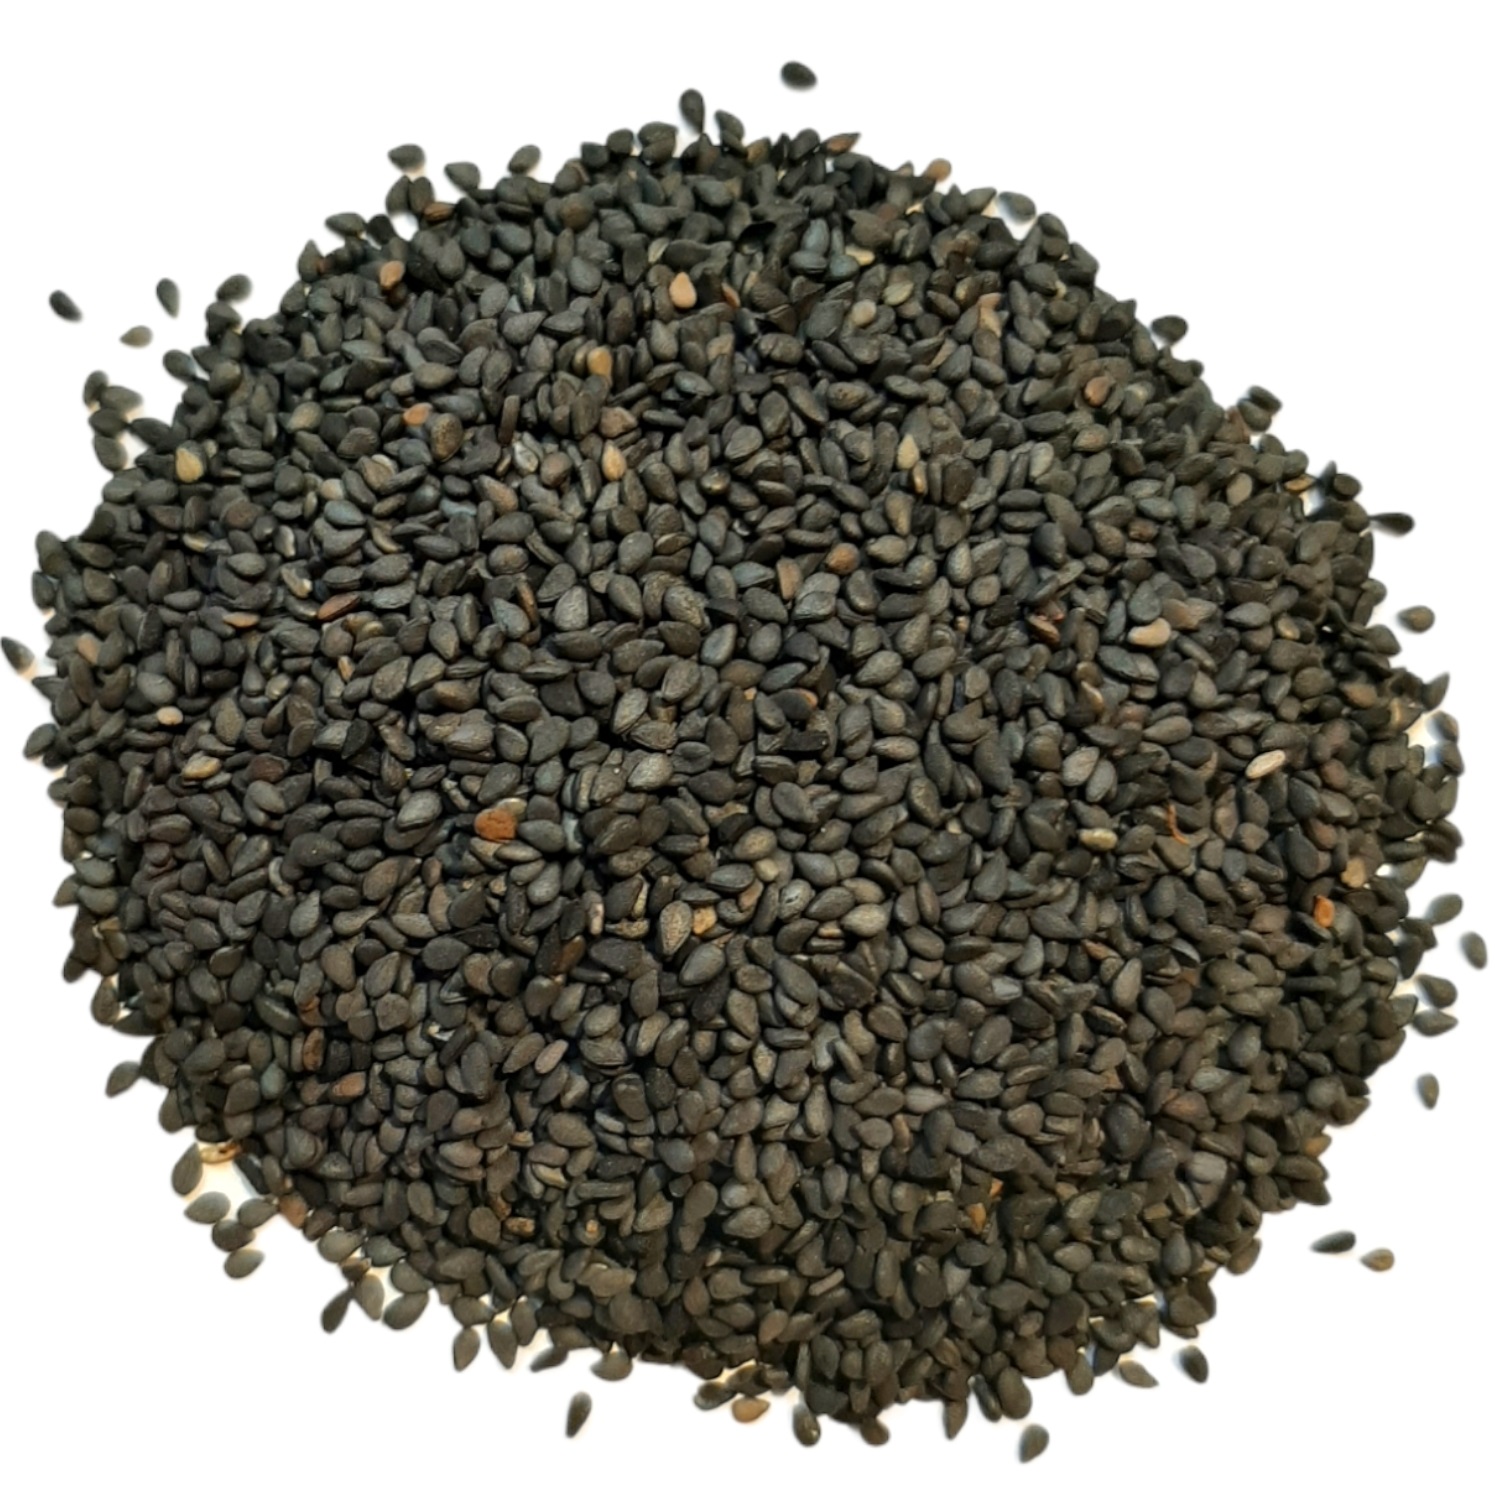 Acheter en ligne: Sésame noir (graine) - Sesamum indicumRistourne